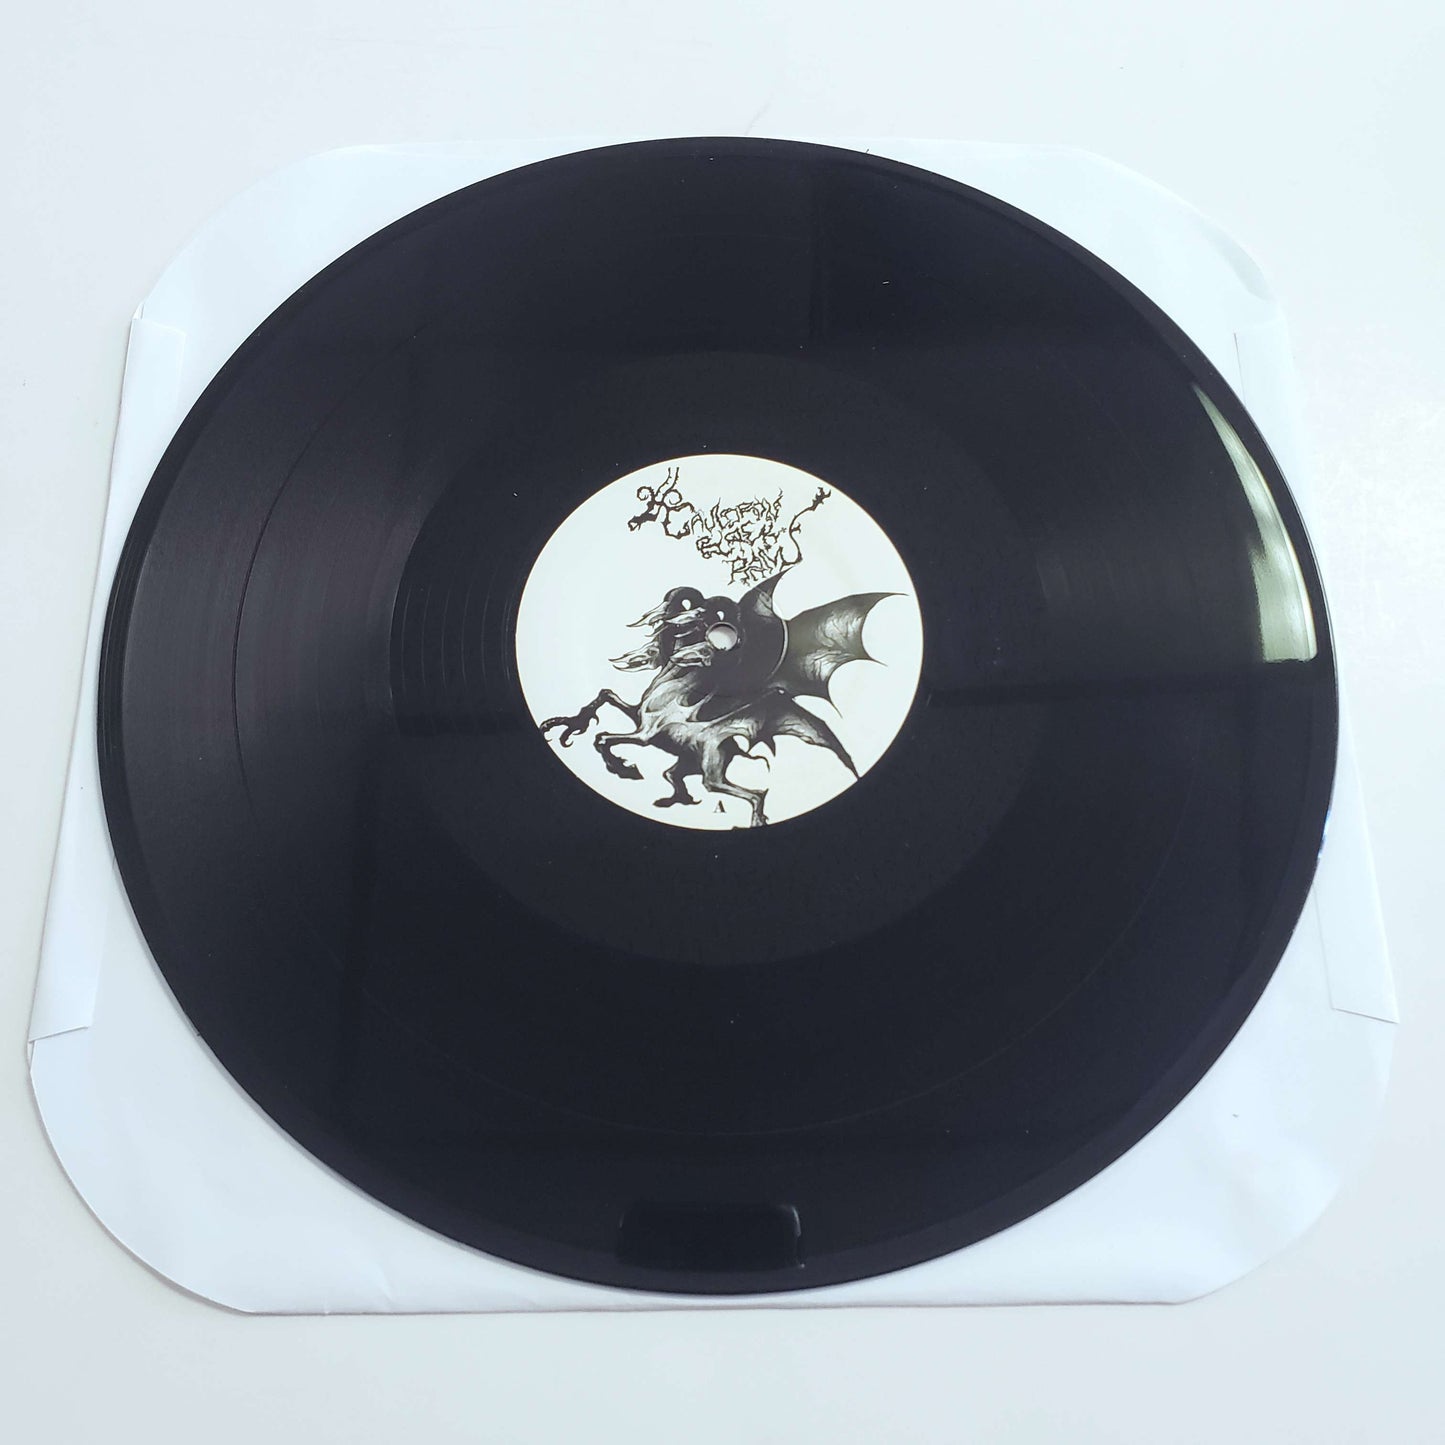 Cauldron Black Ram - The Poisoner original 12" EP (used)